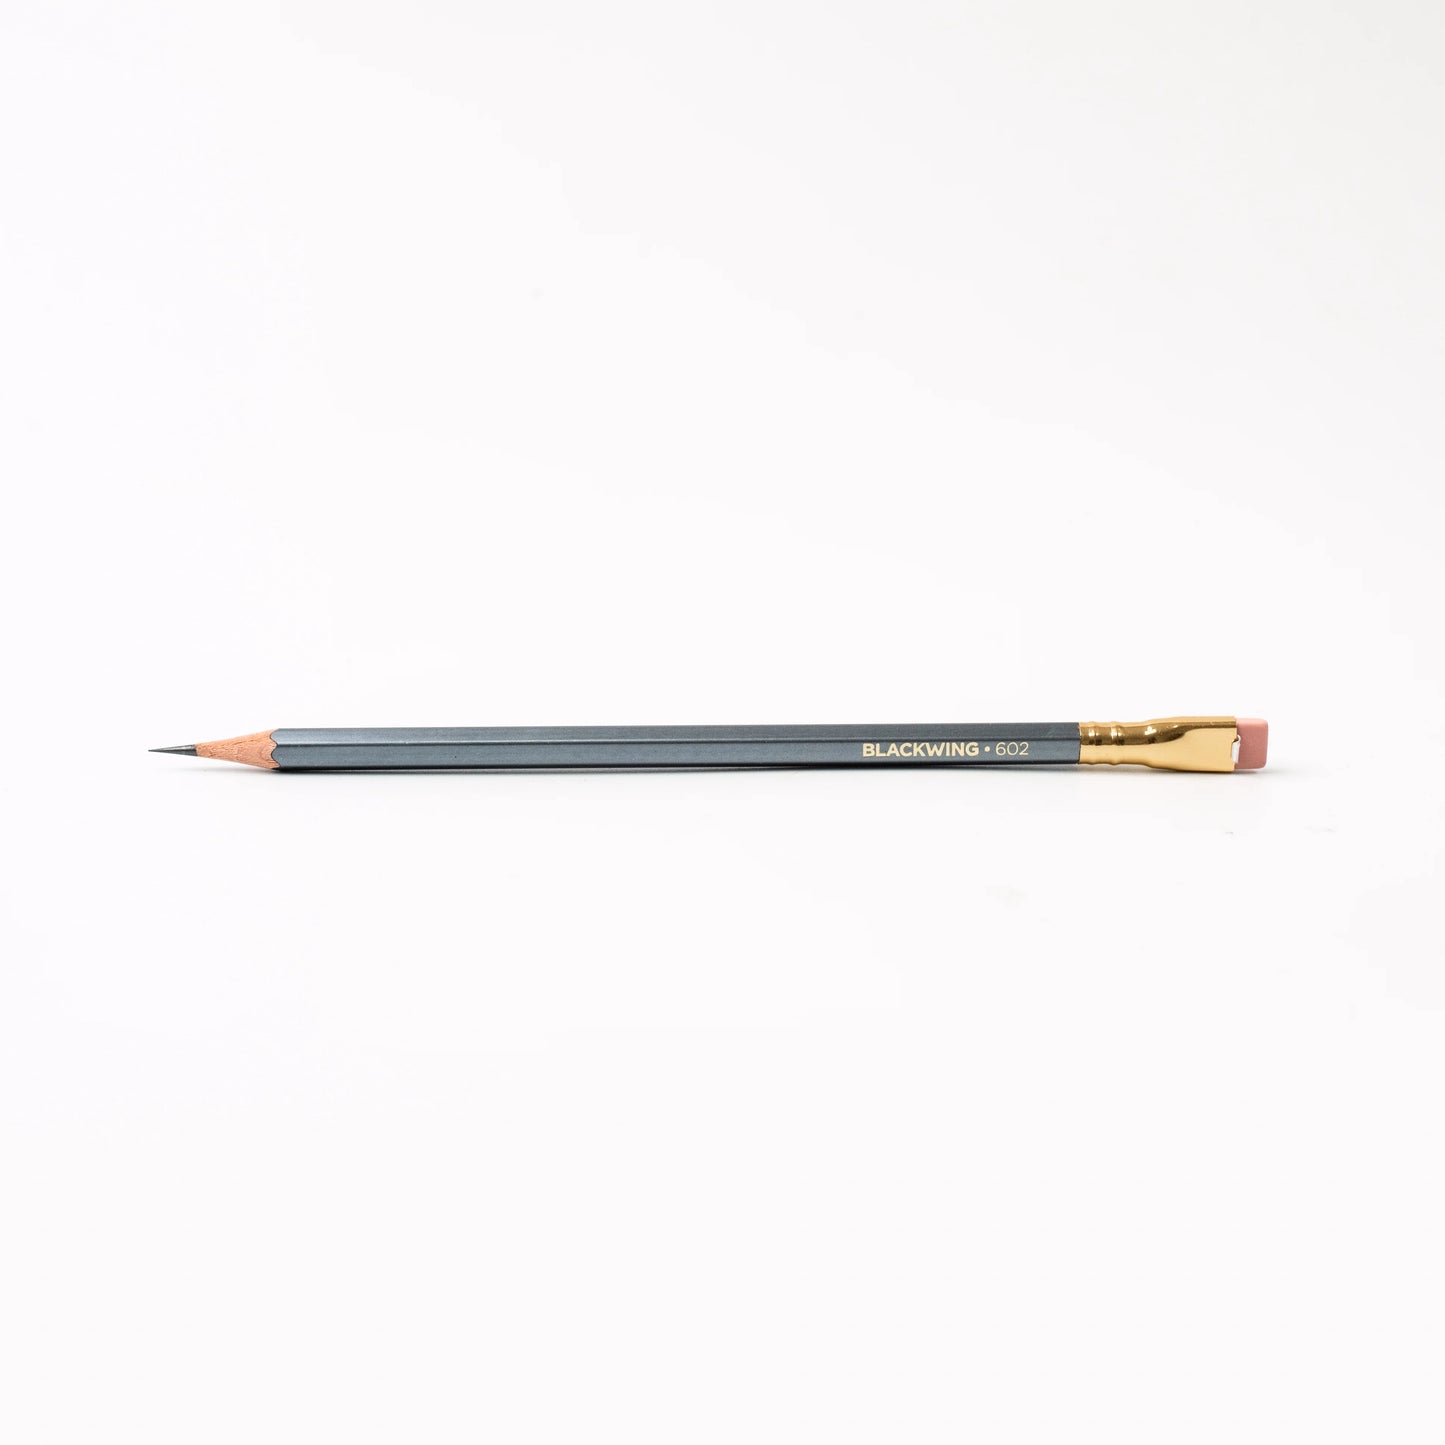 Blackwing - 602 Pencils